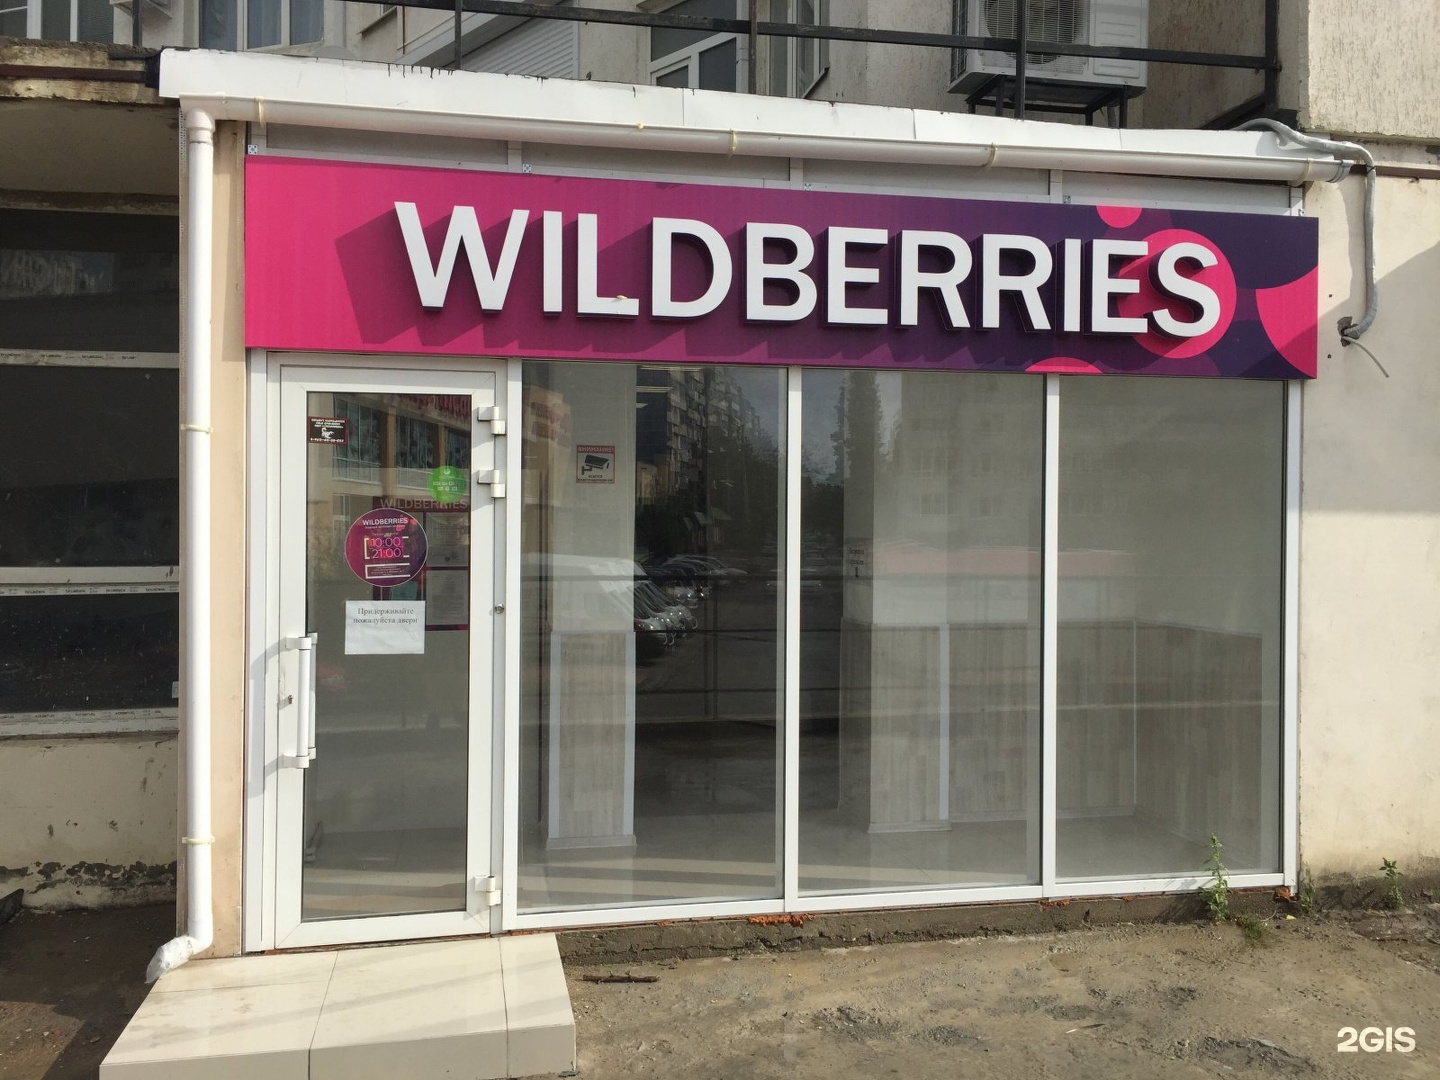 Валдберис бу купить. Wildberries вывеска. Wildberries магазин. Рекламная вывеска магазина. Вывеска Wildberries новая.